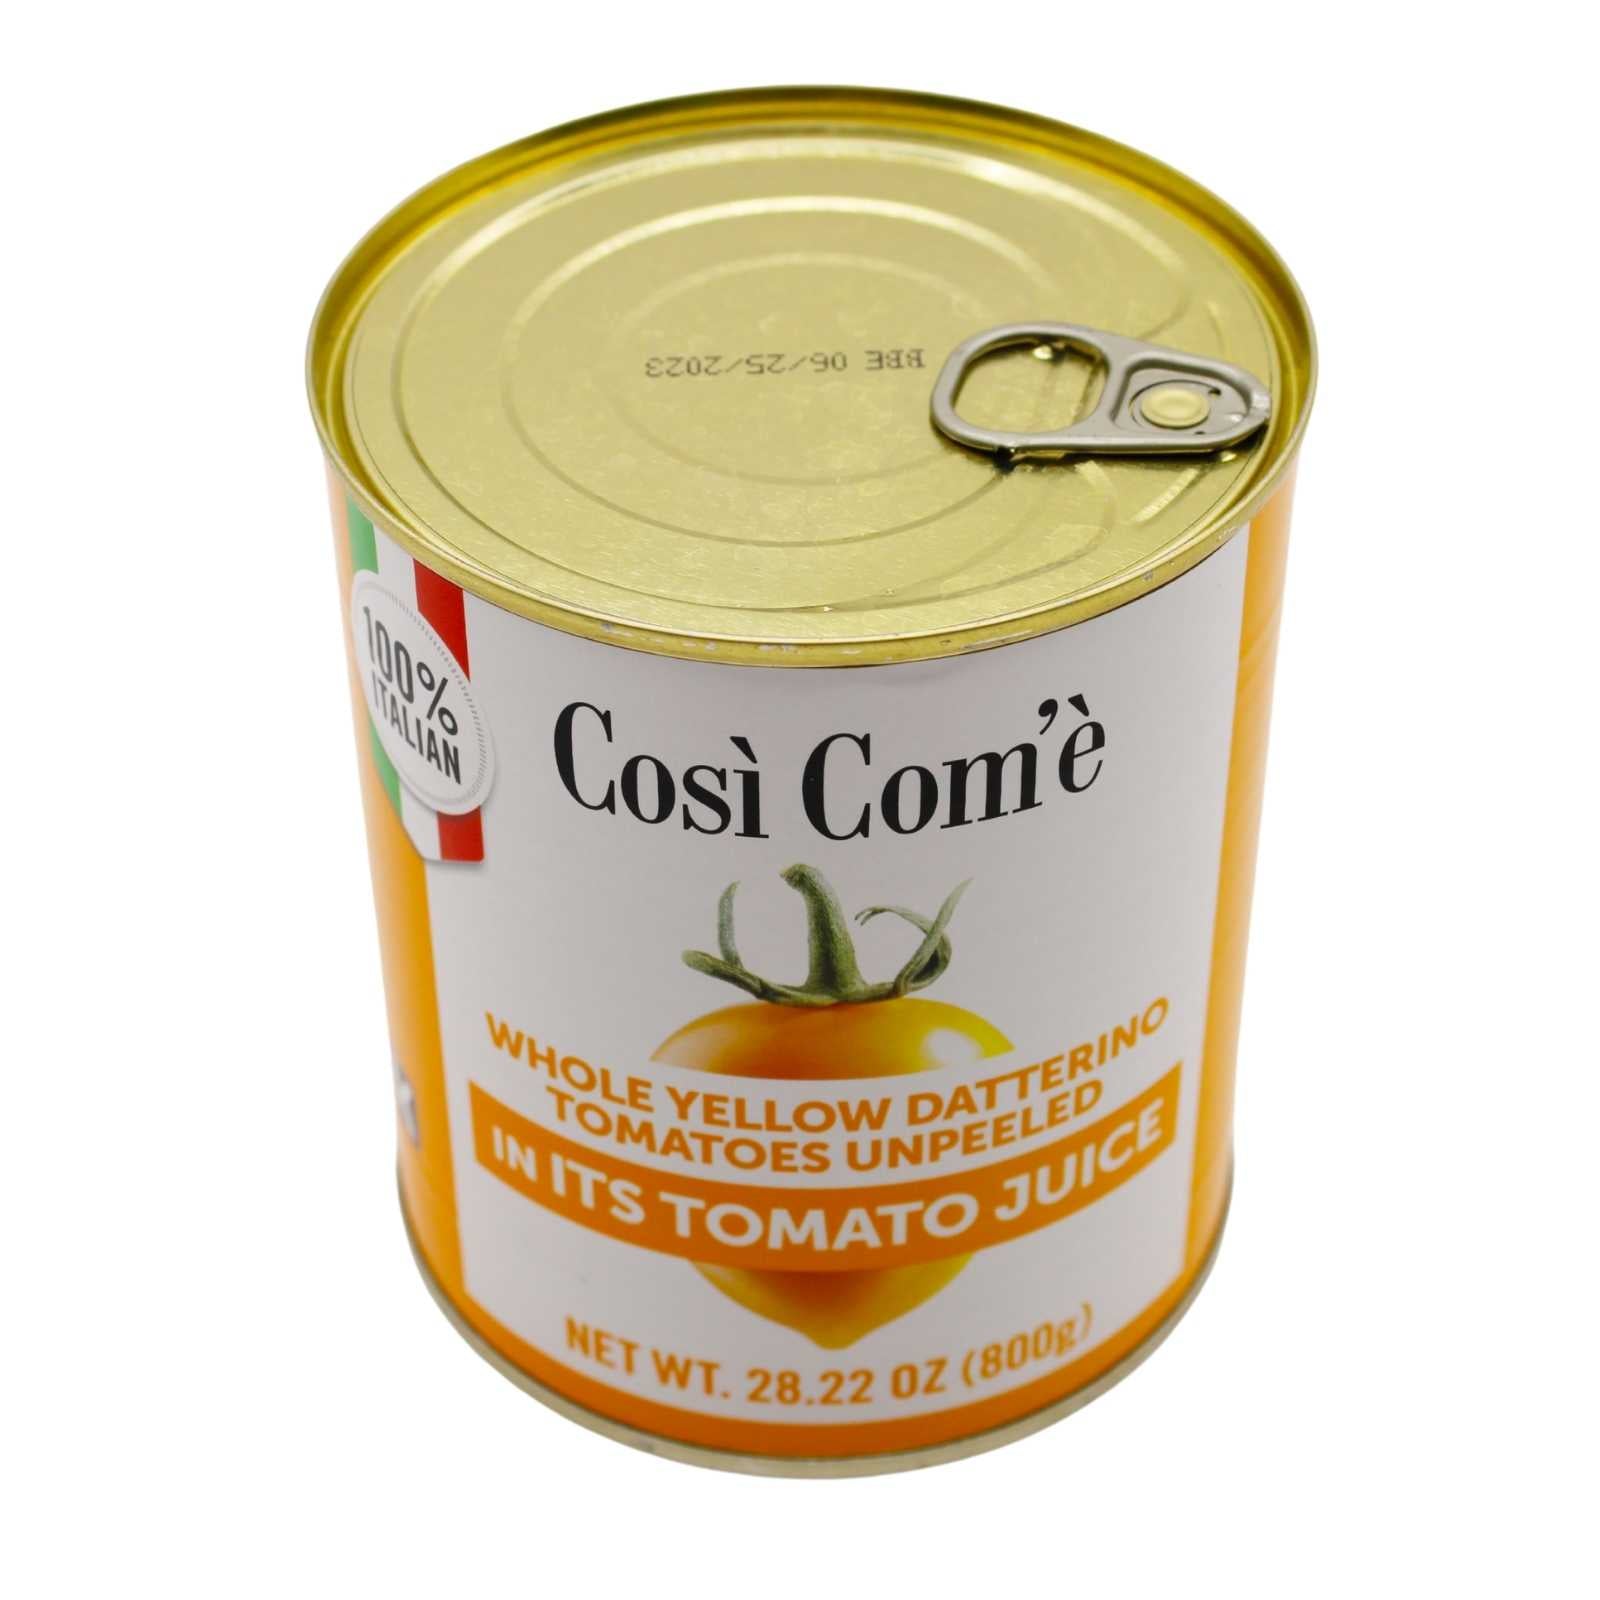 Cosi Com'e Whole Yellow Datterini Tomatoes unpeeled in Juice | 28.22 oz (800g)